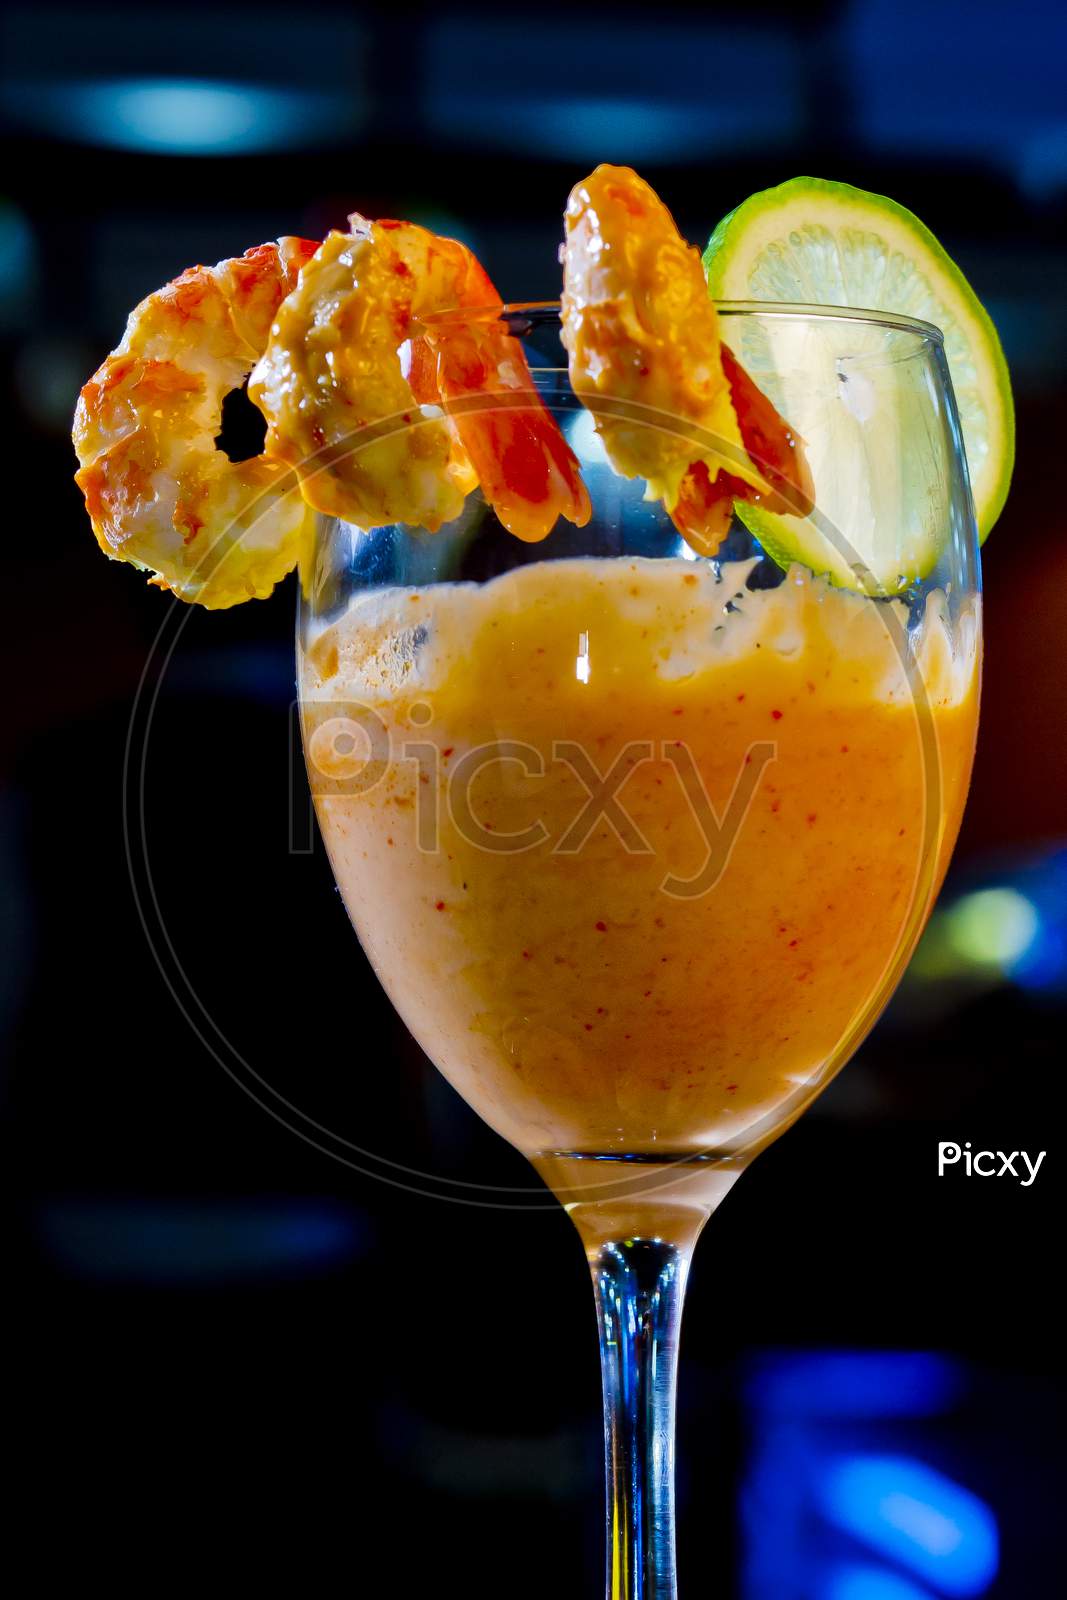 A Glass Of Mouthful Tasty Shrimp Cocktail Appetizer.